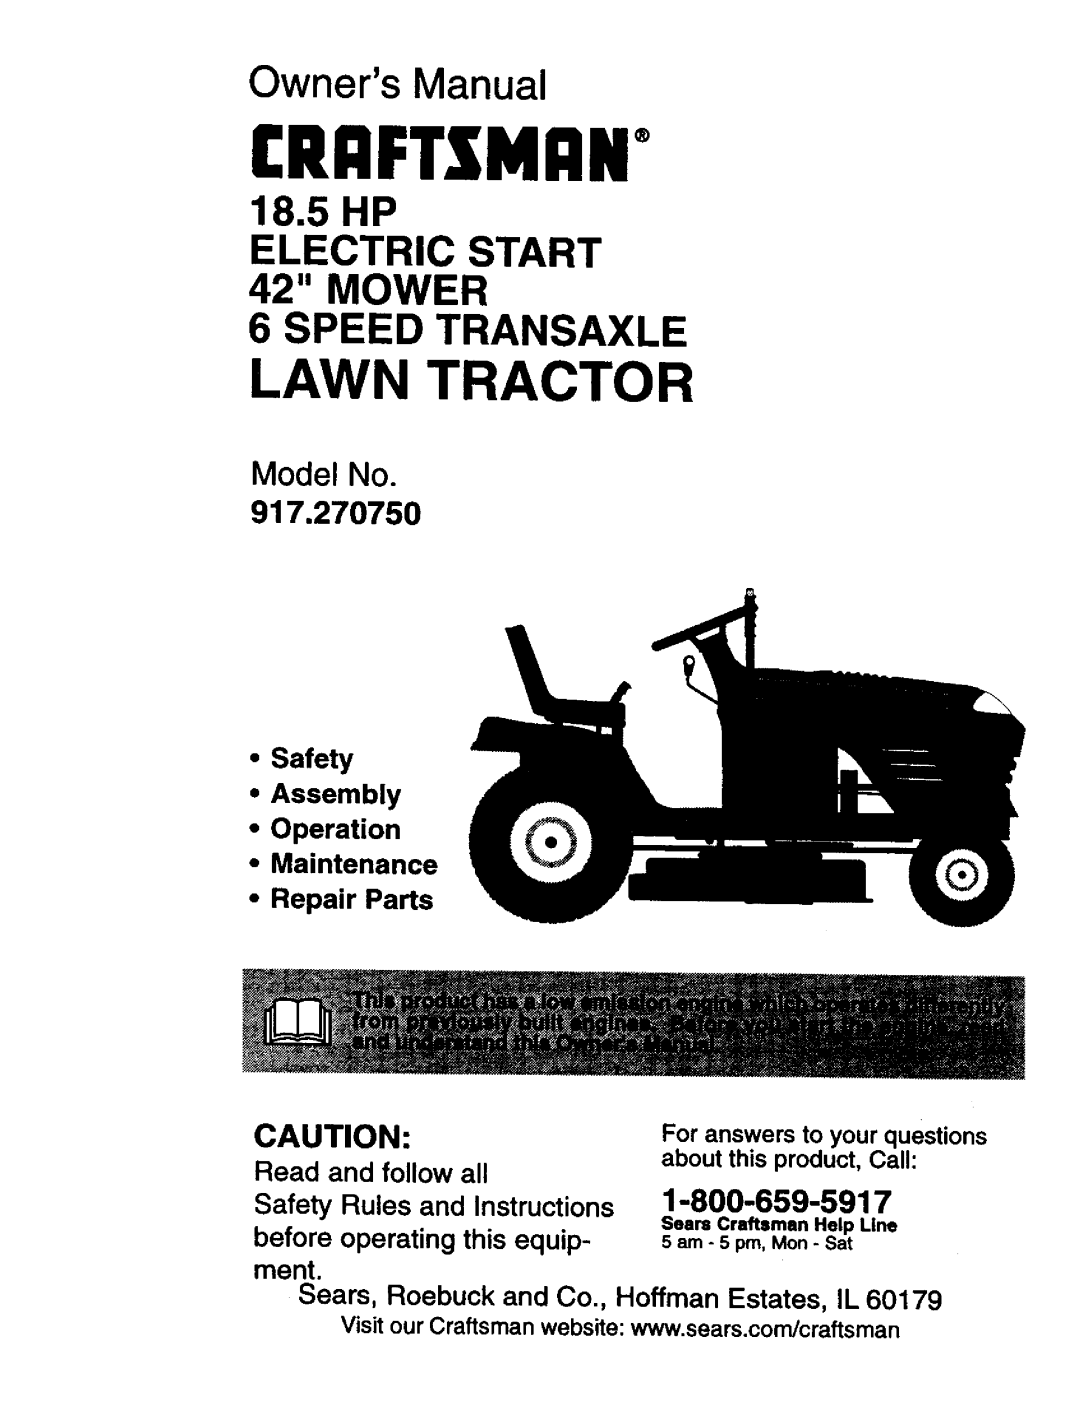 Craftsman 917.27075 owner manual RHFTSMRNo, Lawn Tractor, ELECTRIC START 42 MOWER 6 SPEED TRANSAXLE, Model No, 18.5HP 